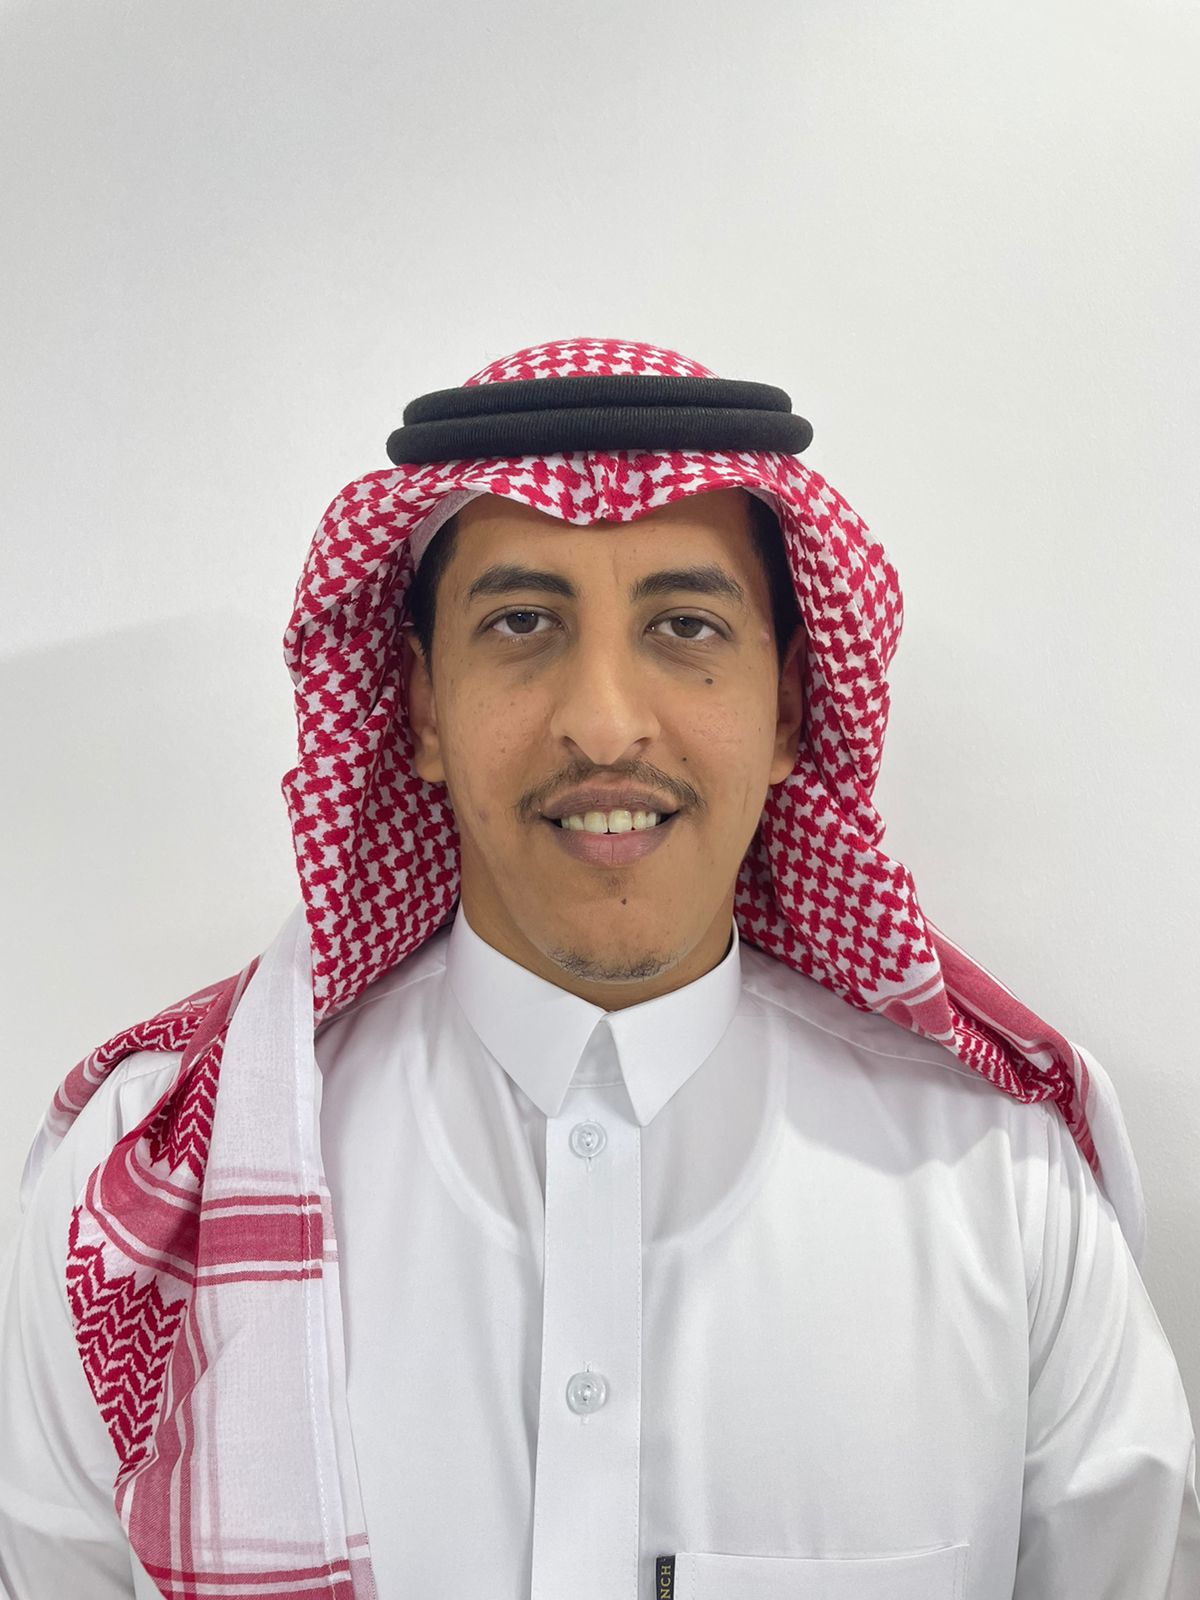 Mr. Faisal Salem Al-Motairi